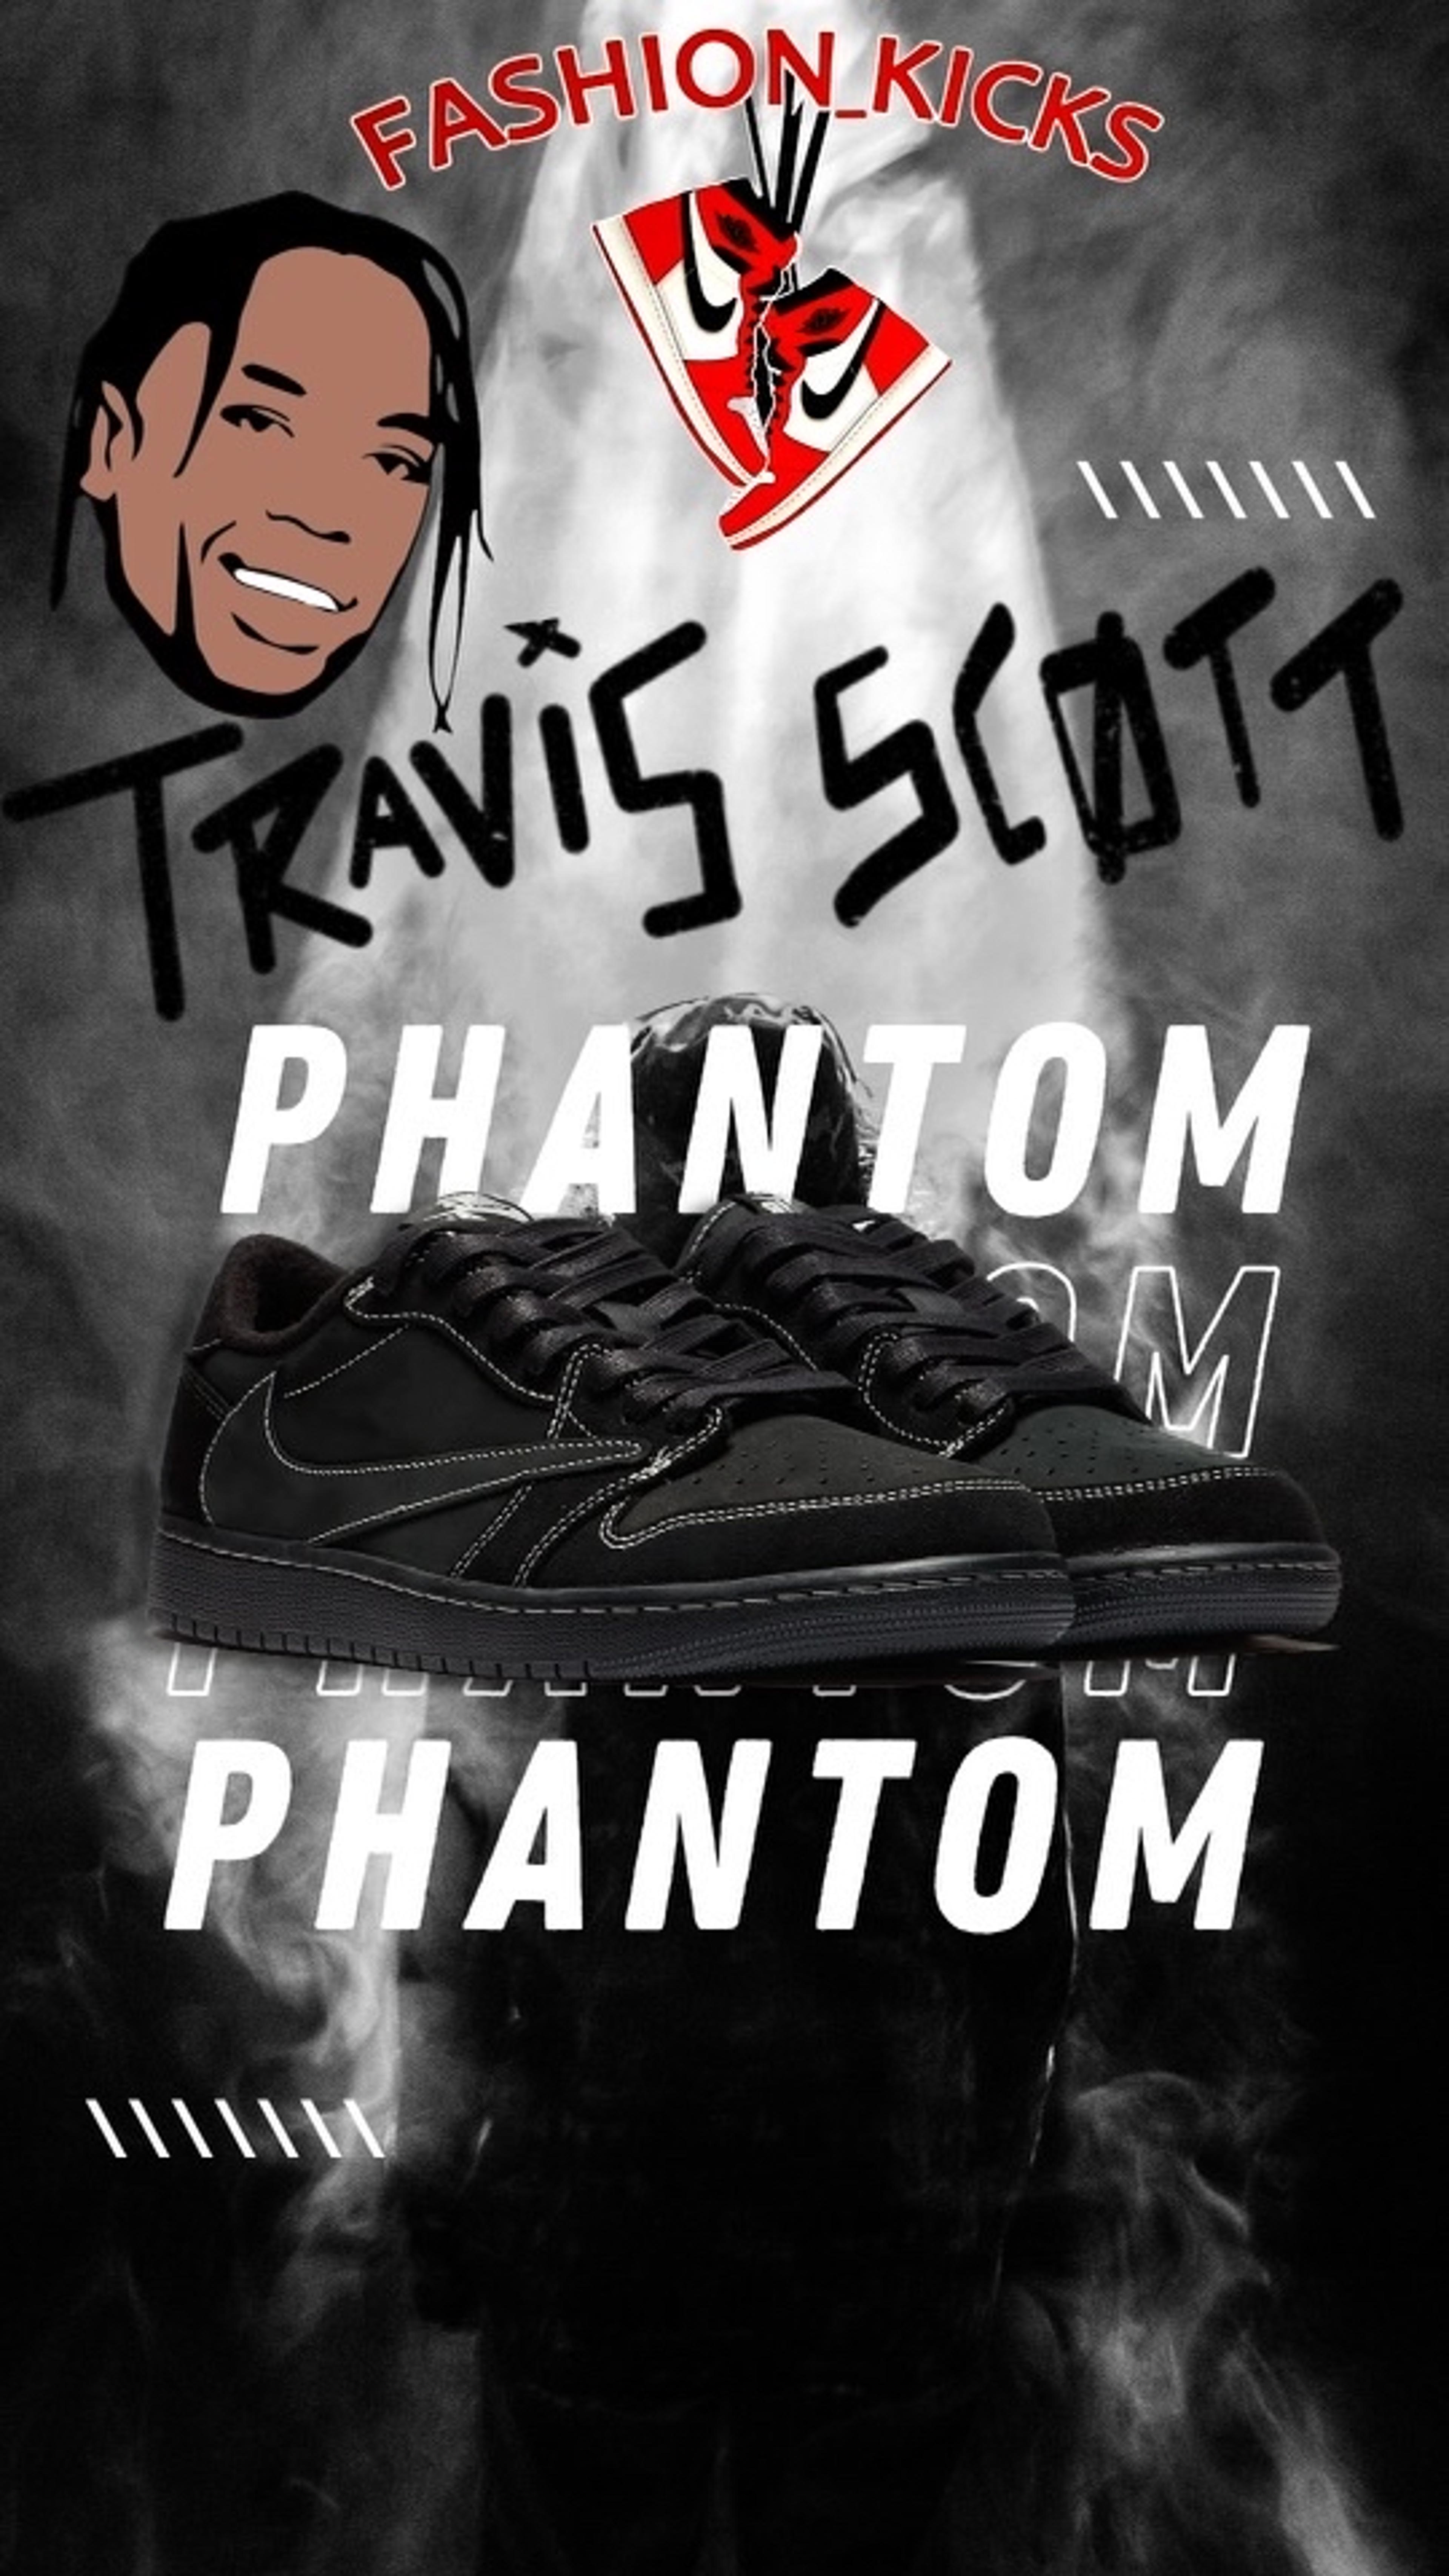 Preview image for the show titled "TRAVIS SCOTT PHANTOM J BALVIN 3 TRAVIS 6 " at April 29, 2024